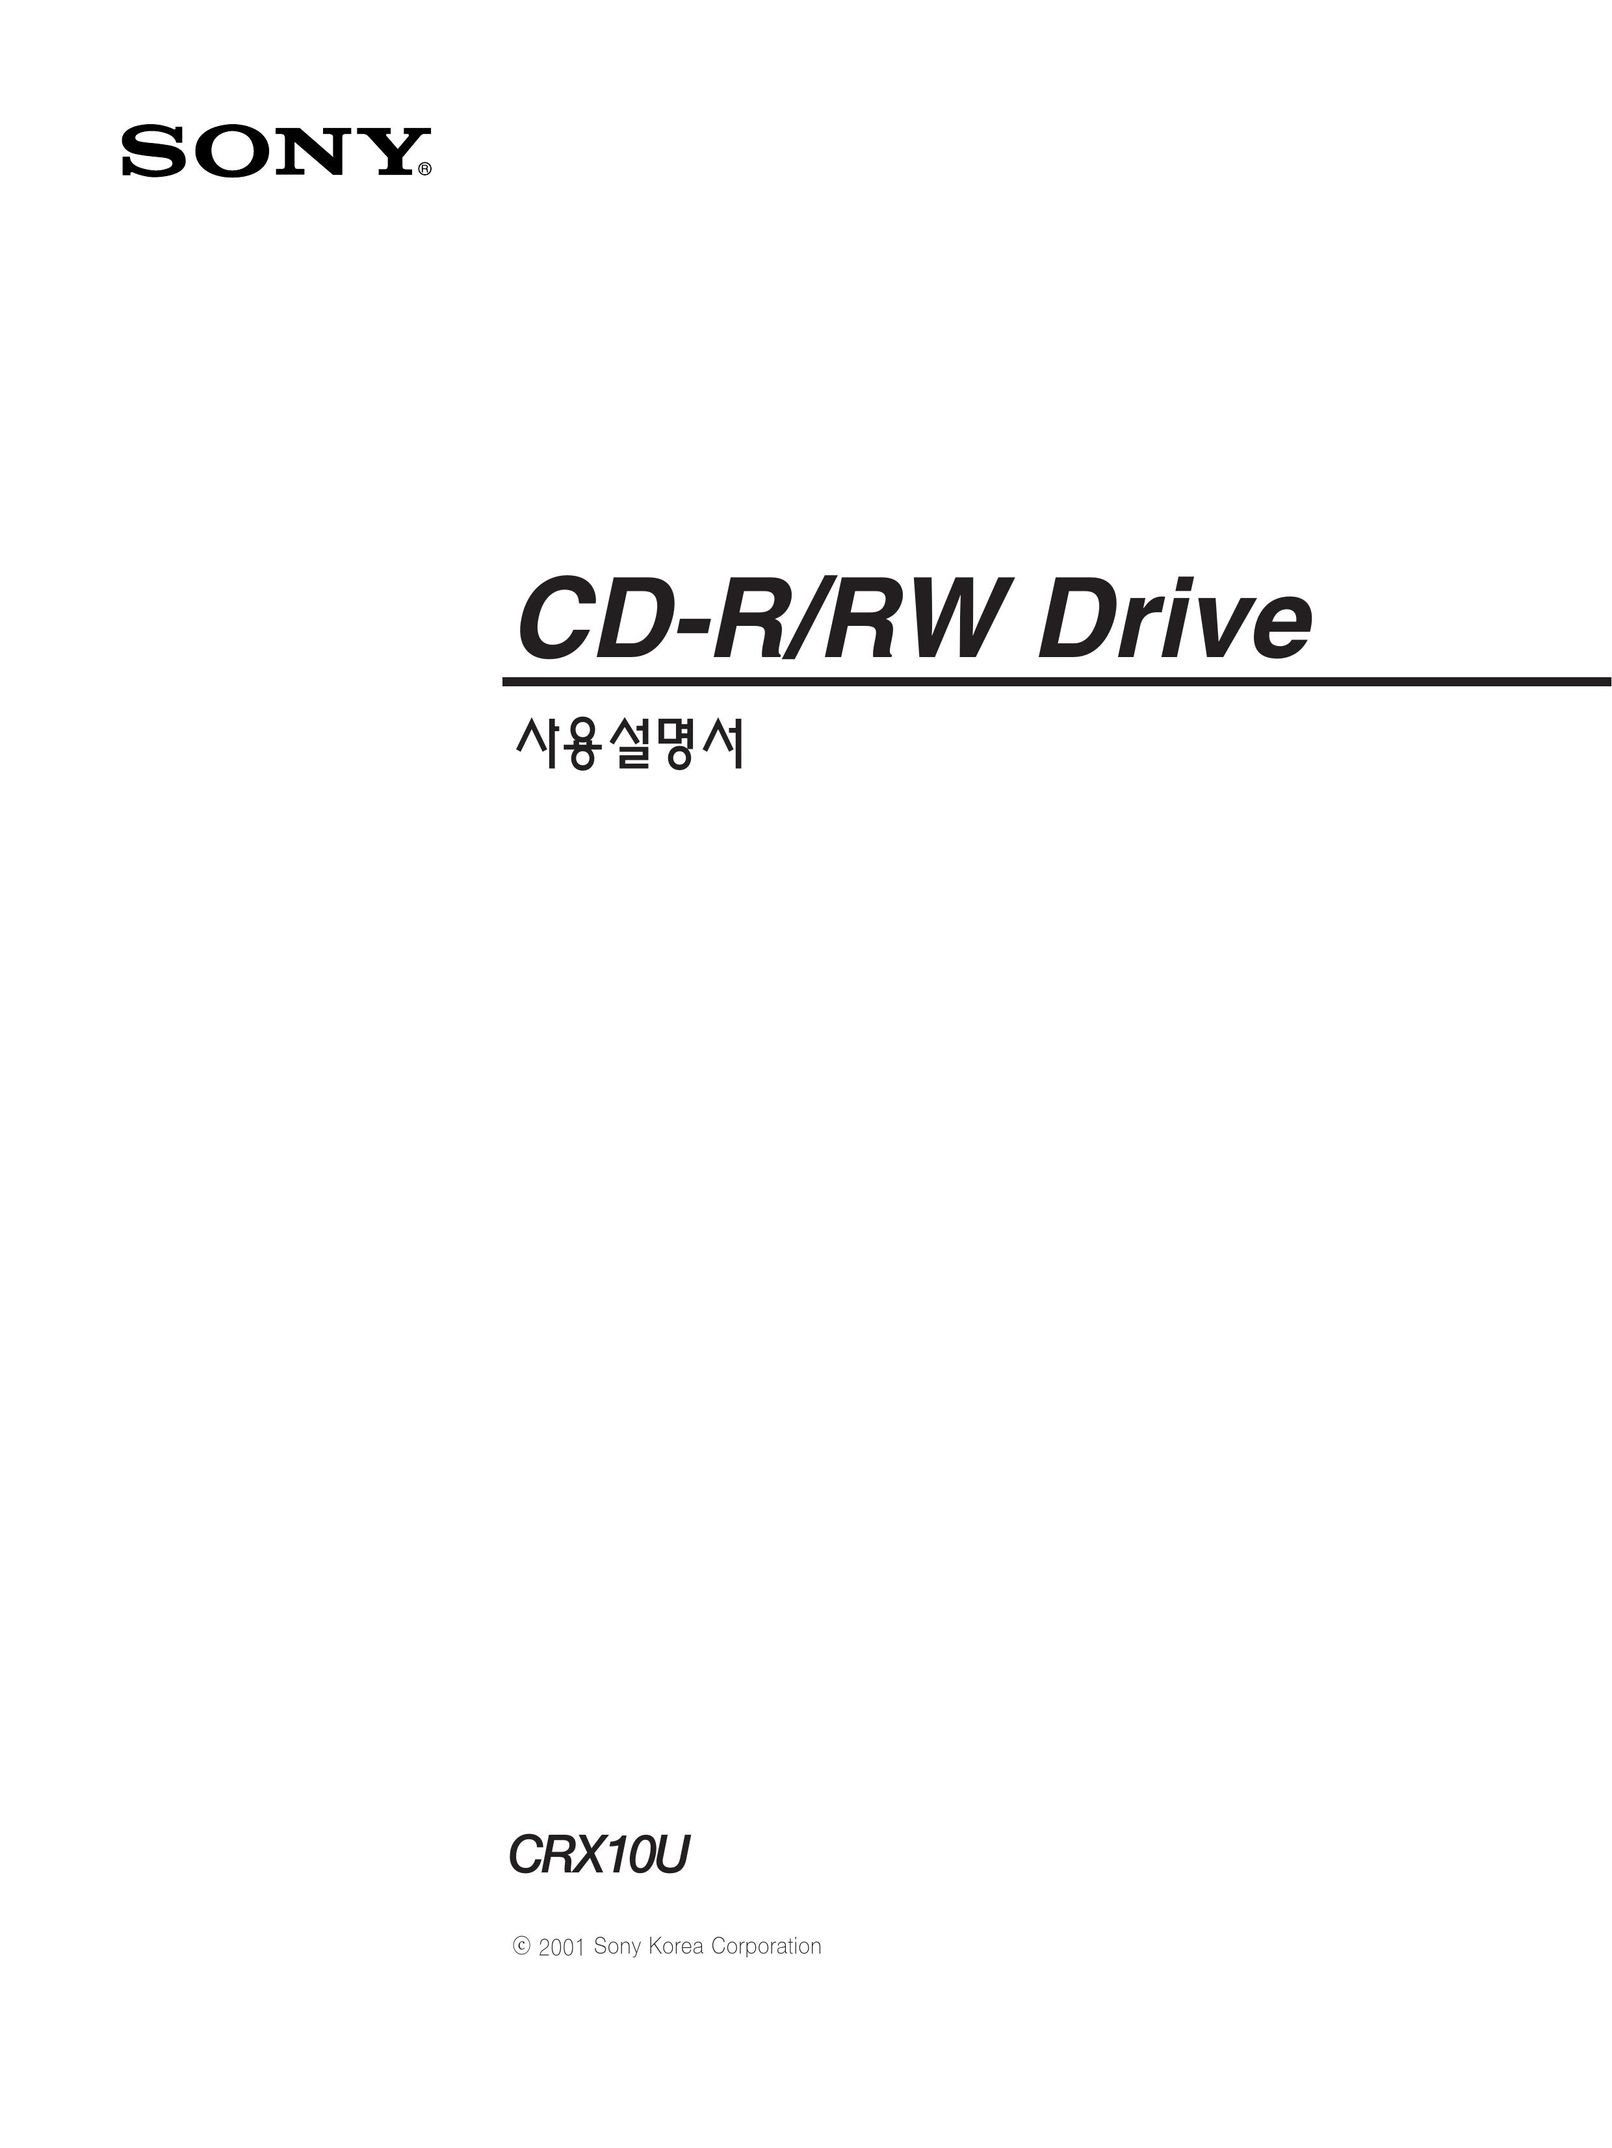 Sony CRX10U Computer Drive User Manual